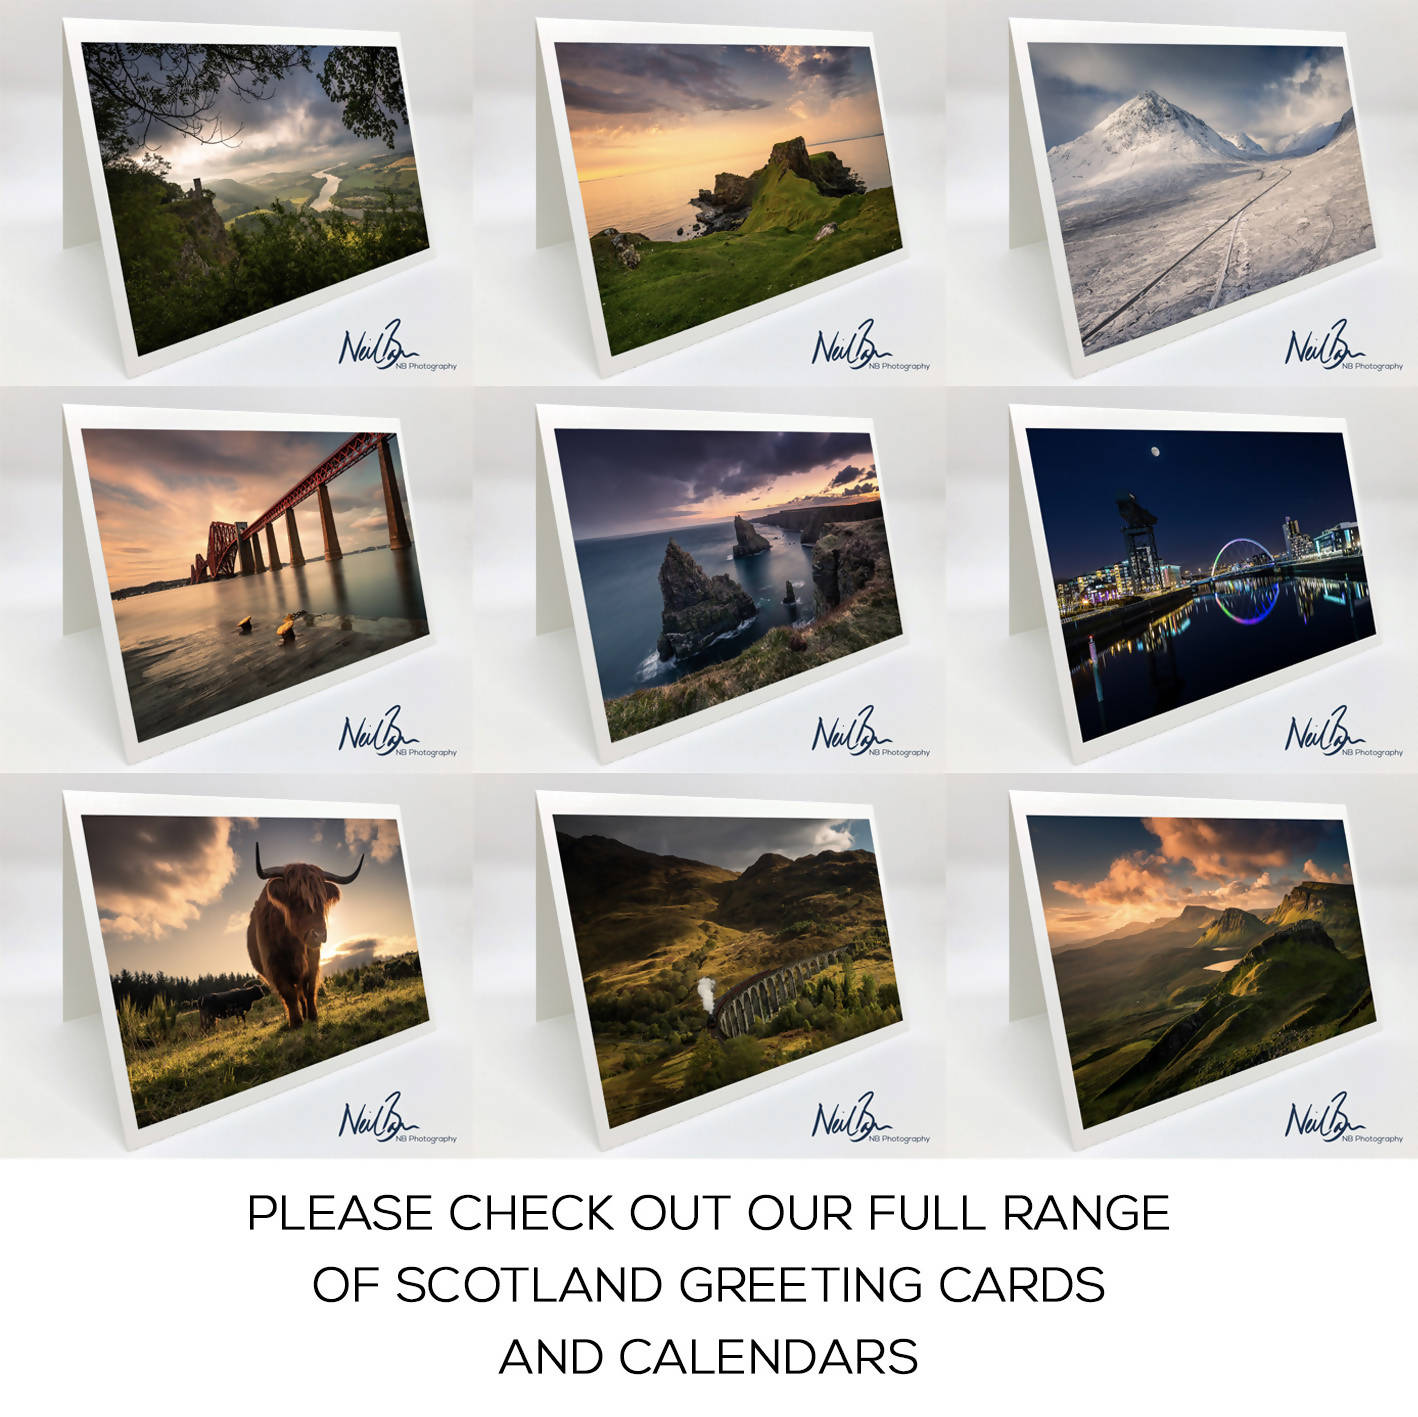 Uig, Isle of Skye - Scotland Greeting Card - Blank Inside